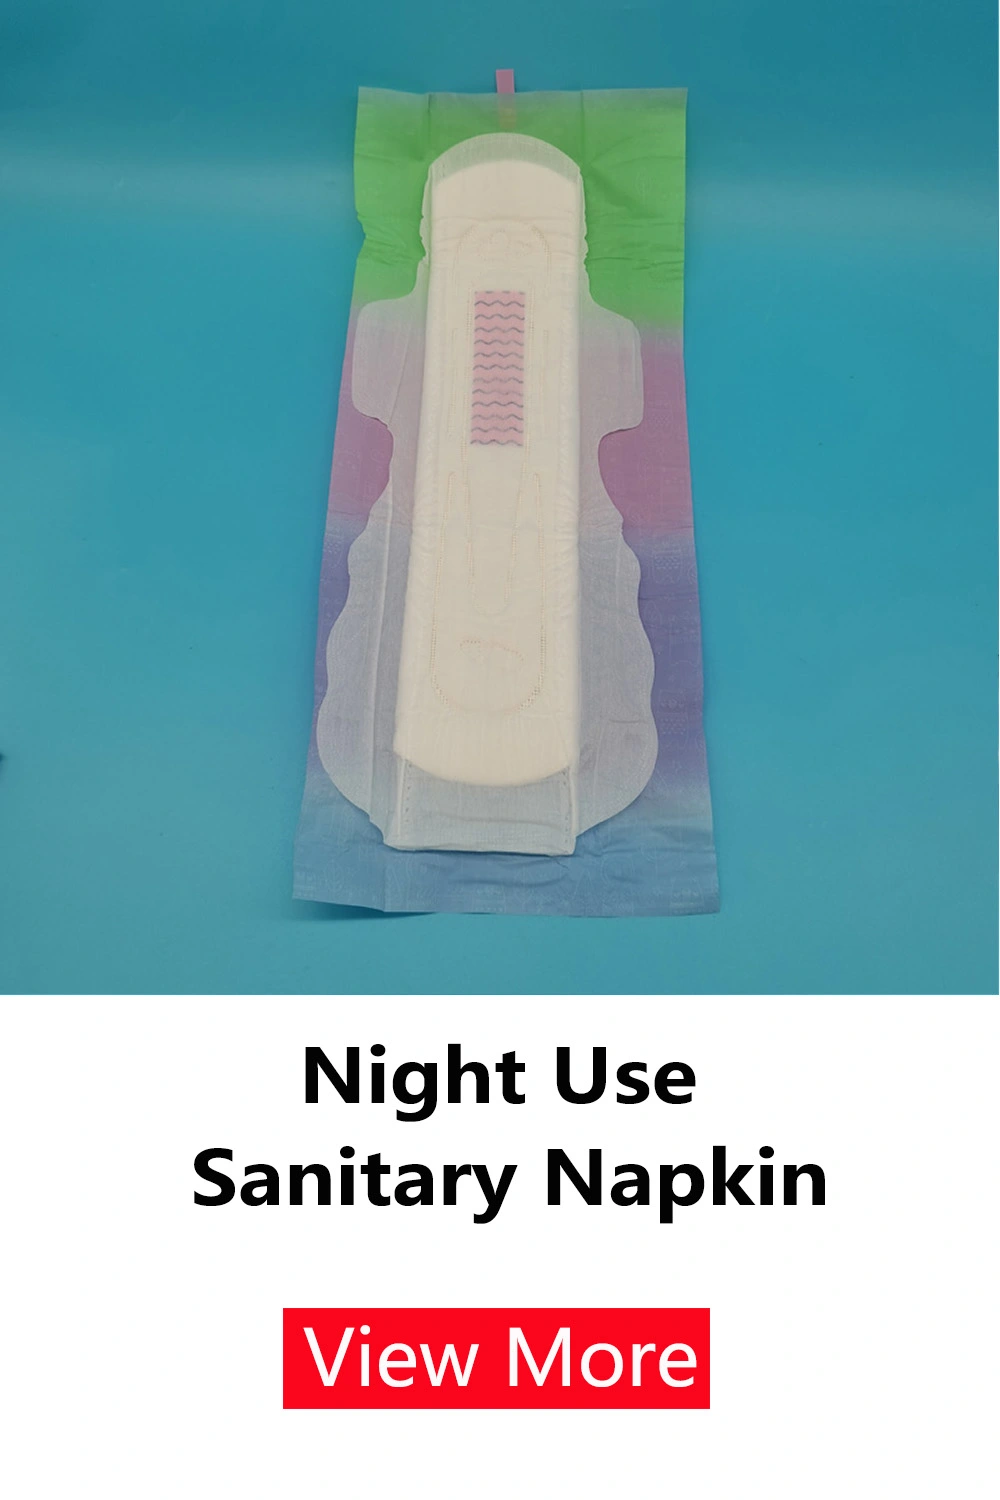 postpartum pad and night use sanitary napkin picture